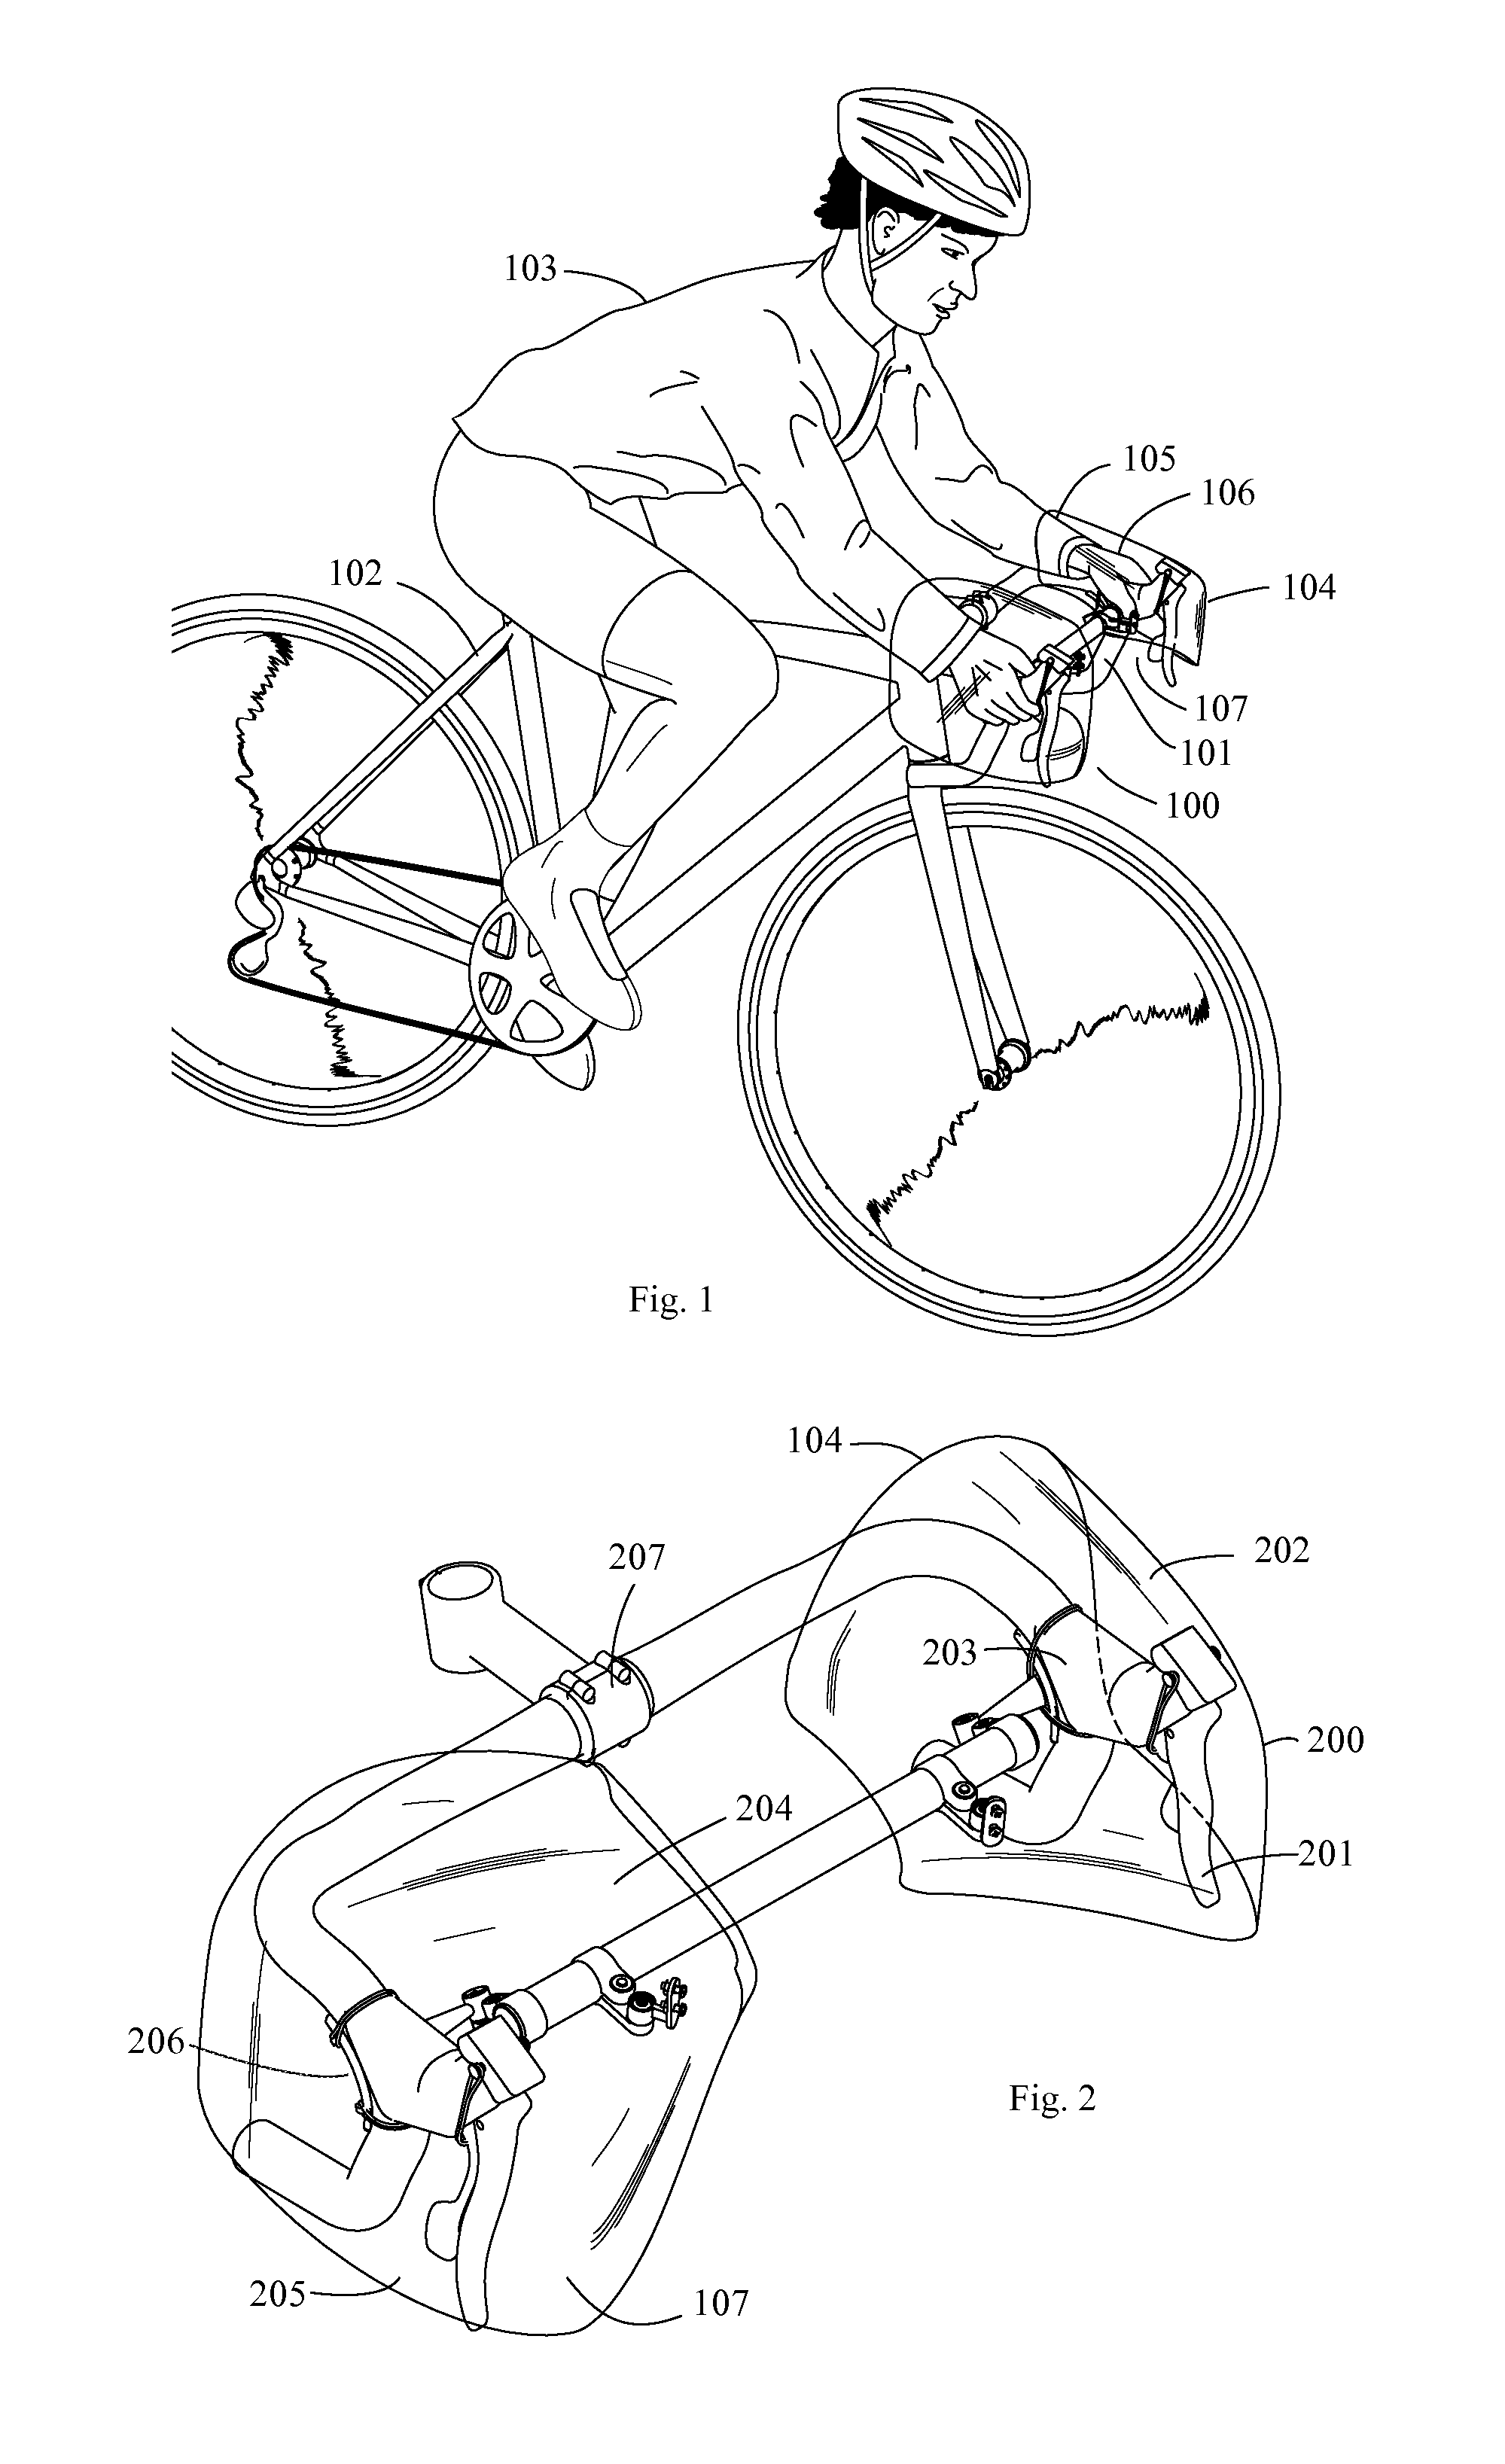 Shield for road bicycle handlebars